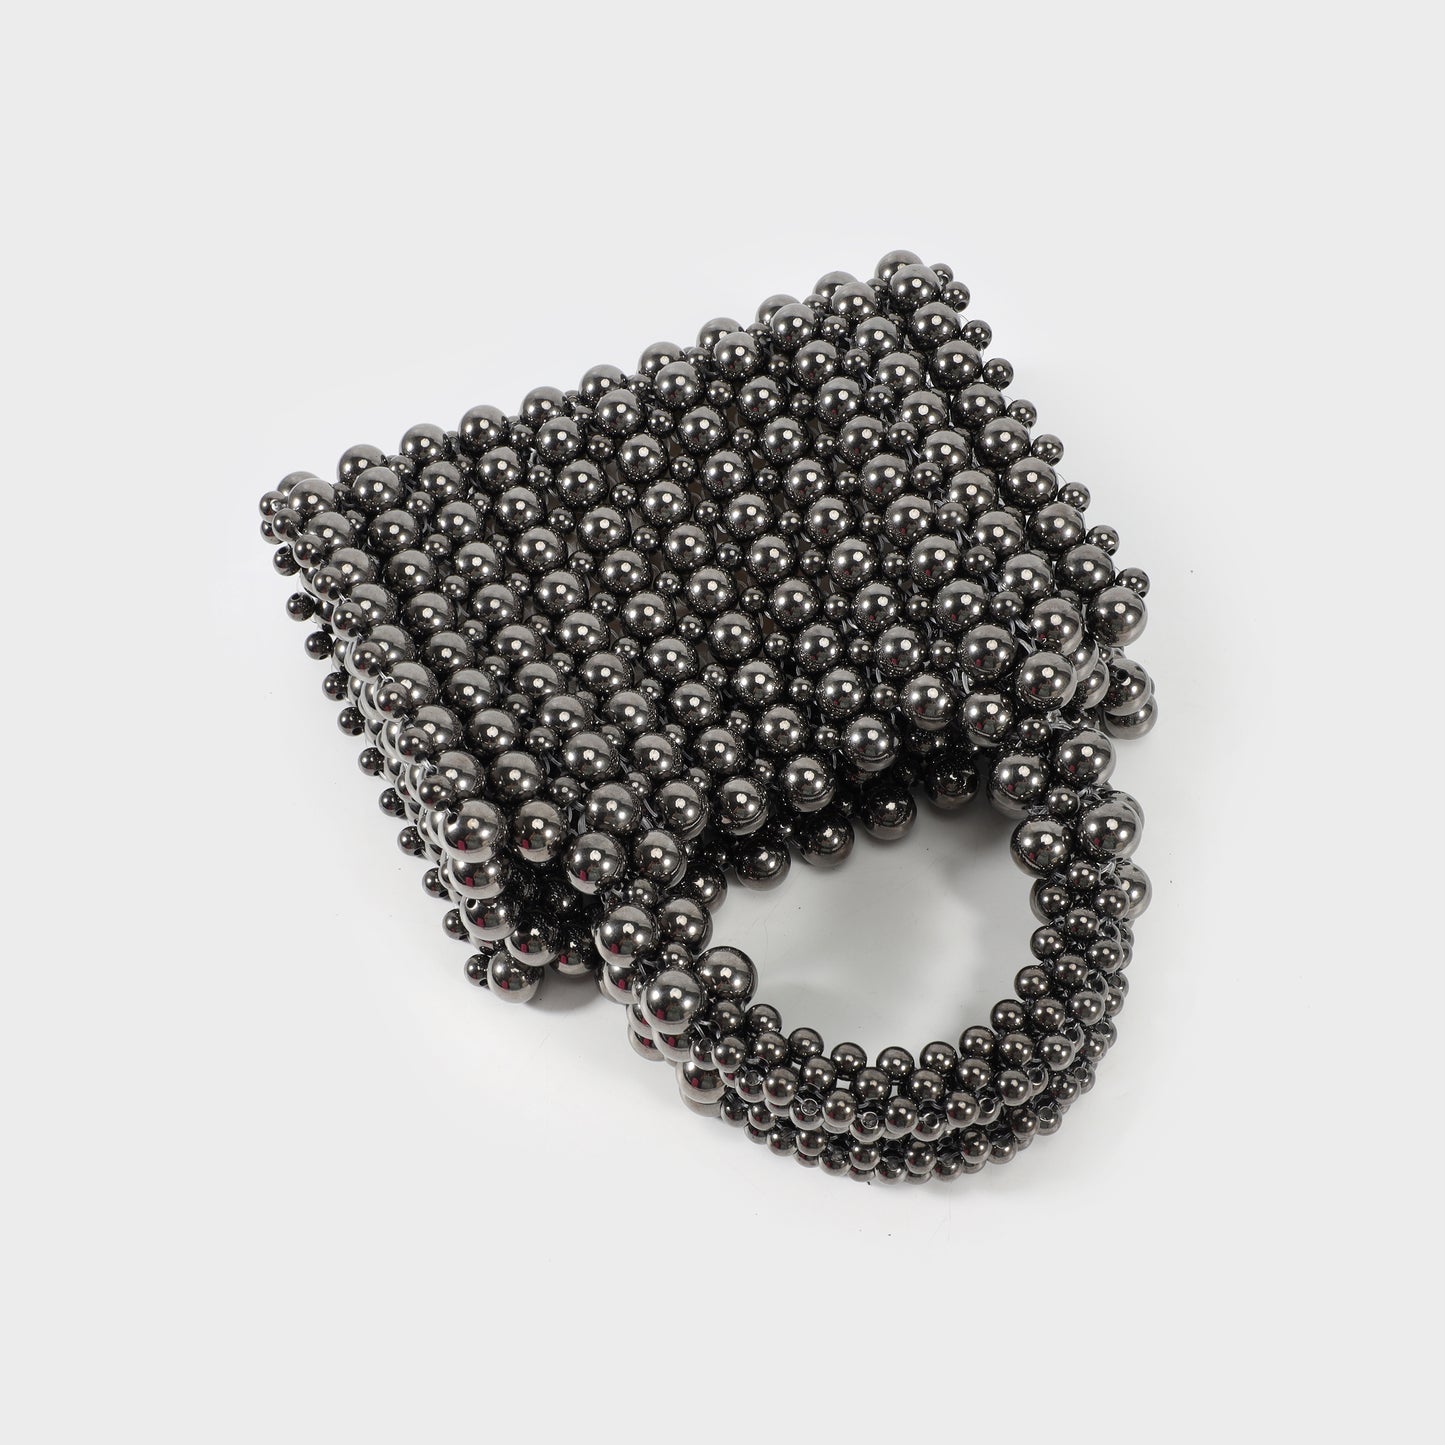 Trunk-shaped handbag with beads